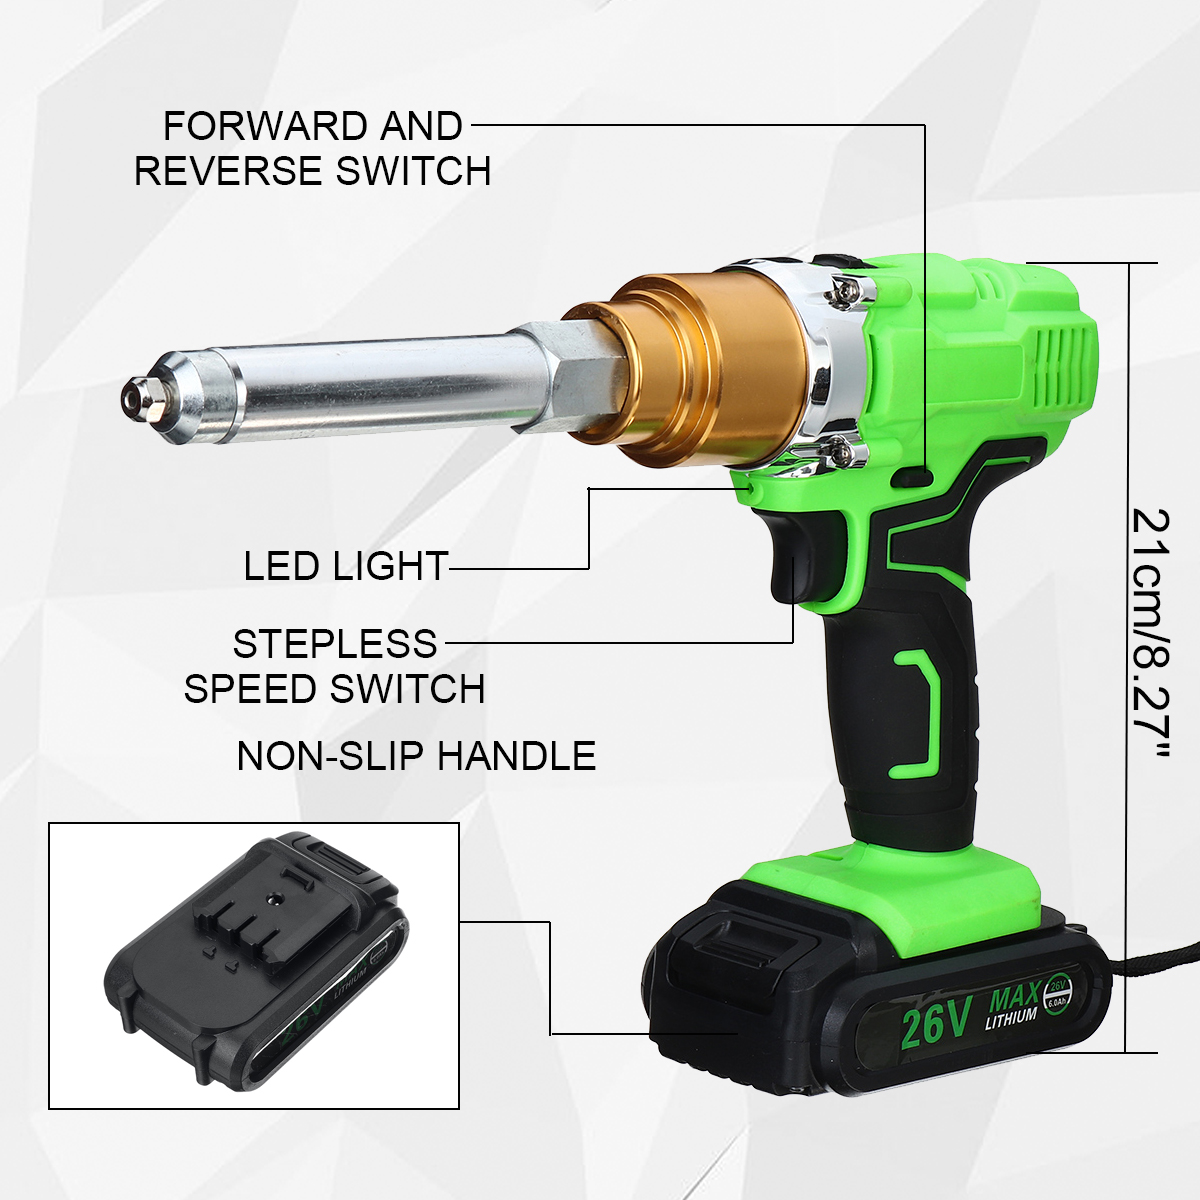 26V-Electric-Cordless-Rivet-Guns-Insert-Nut-Pull-Riveting-Tool-LED-Light-With-Battery-1790808-4